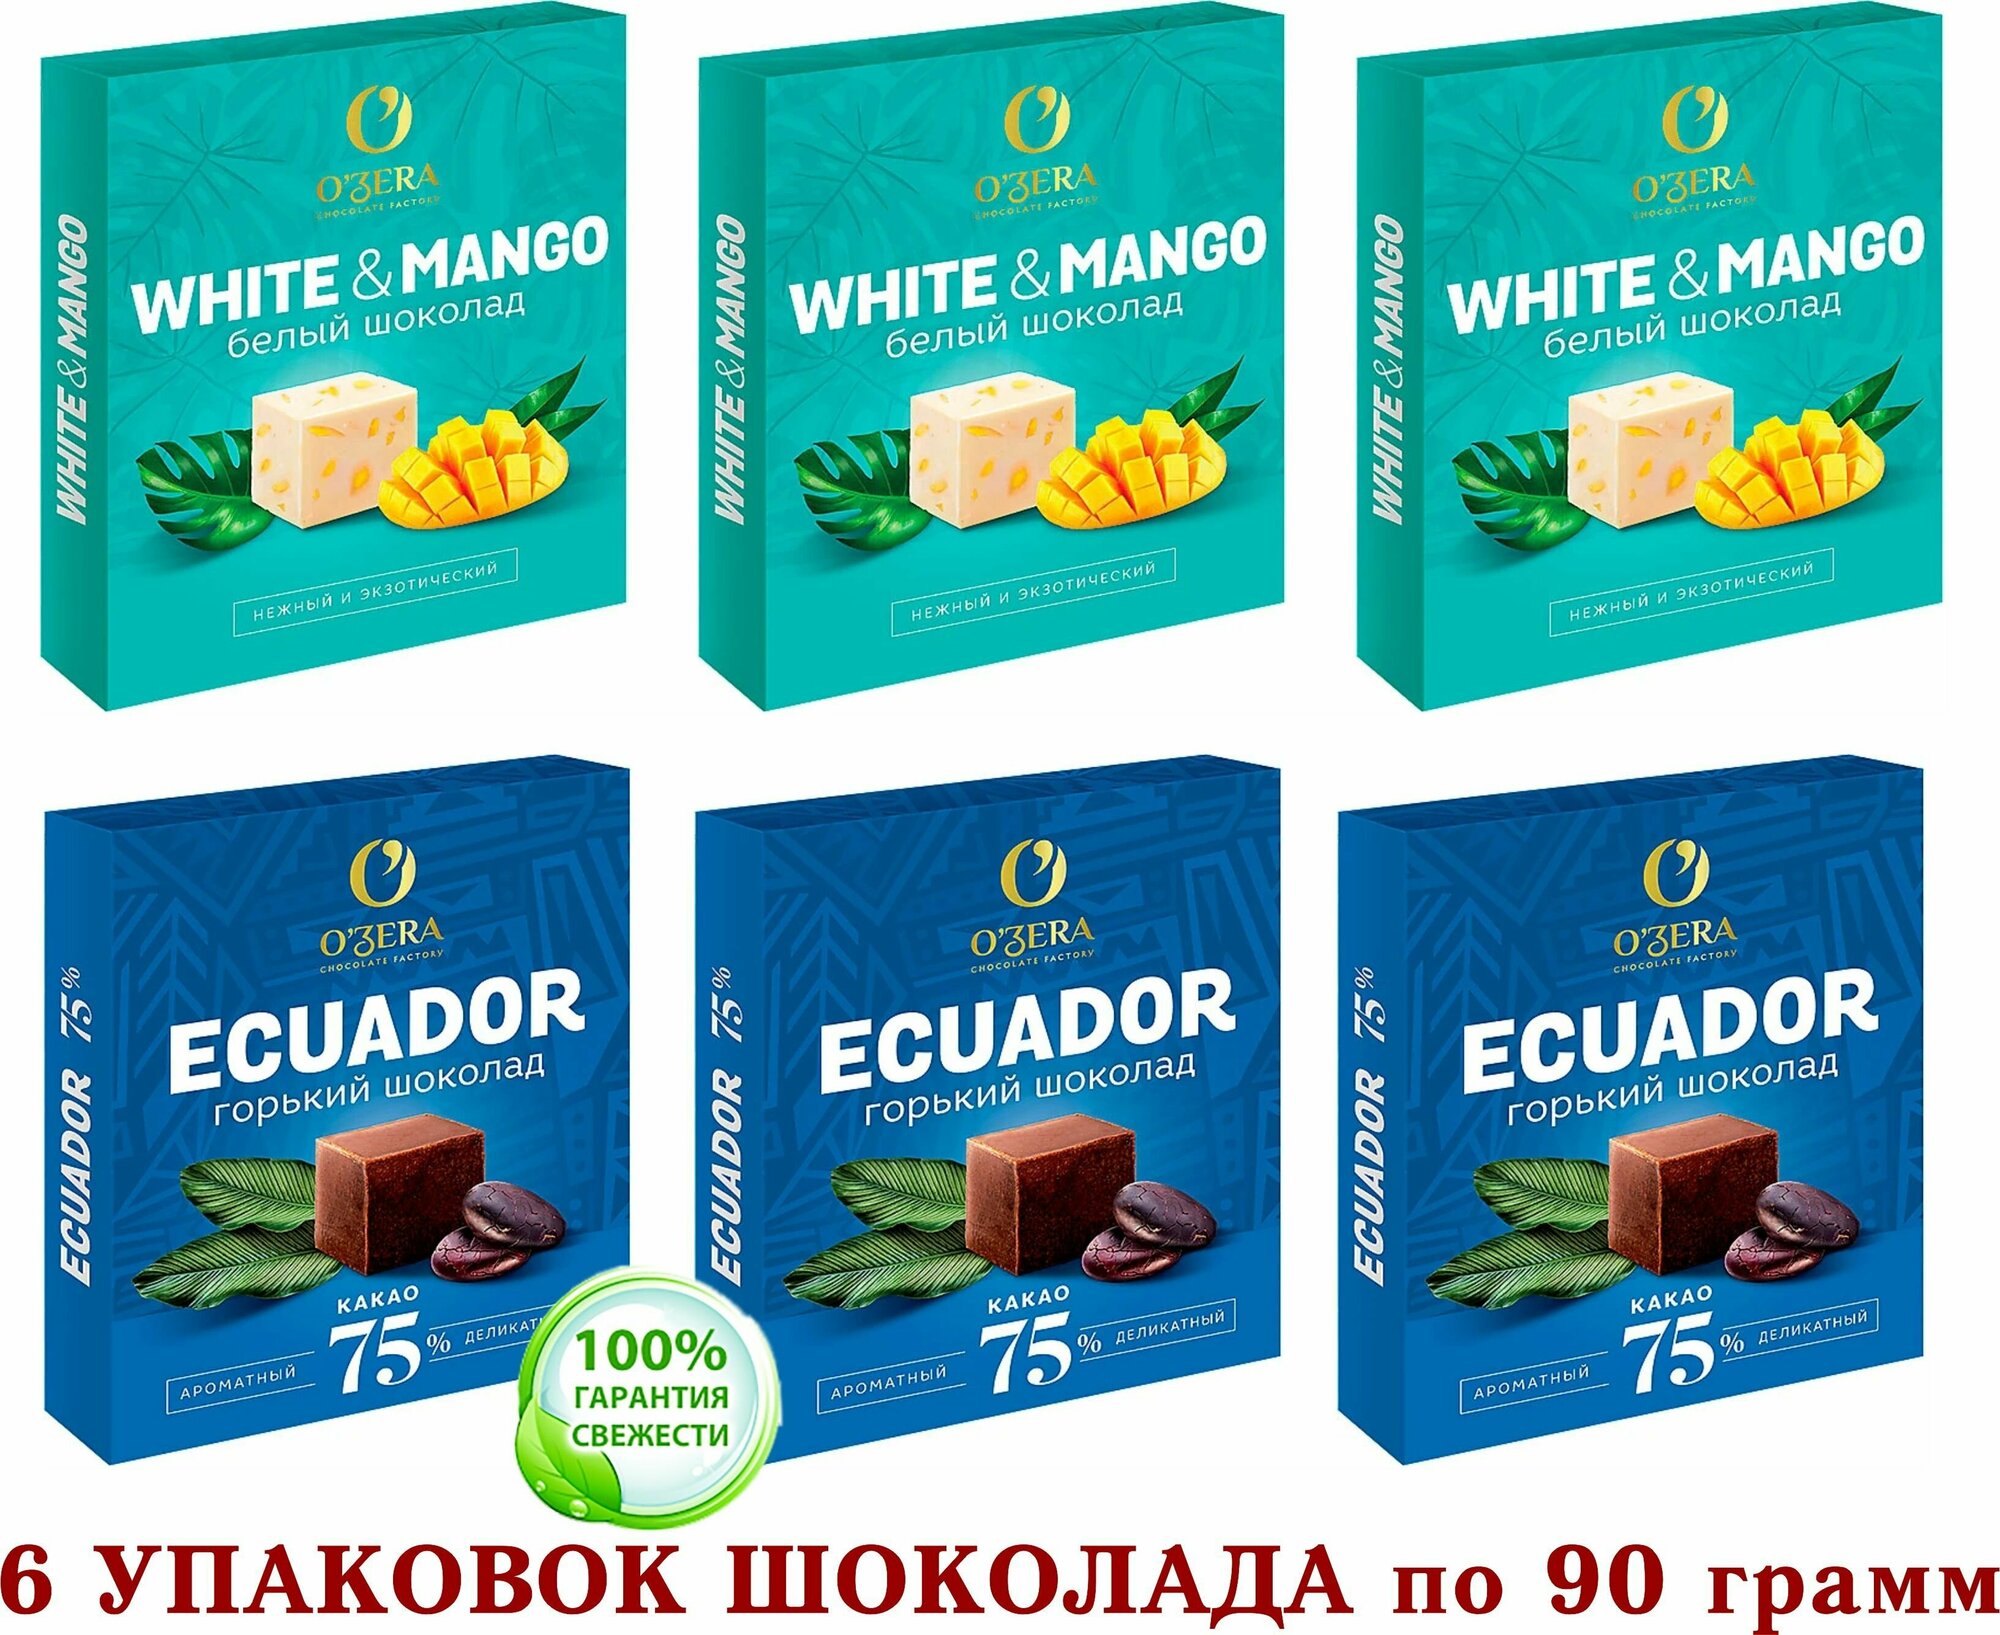 Шоколад OZERA микс ECUADOR горький 75%/белый с манго OZera WHITE & MANGO Озерский сувенир 6*90 грамм